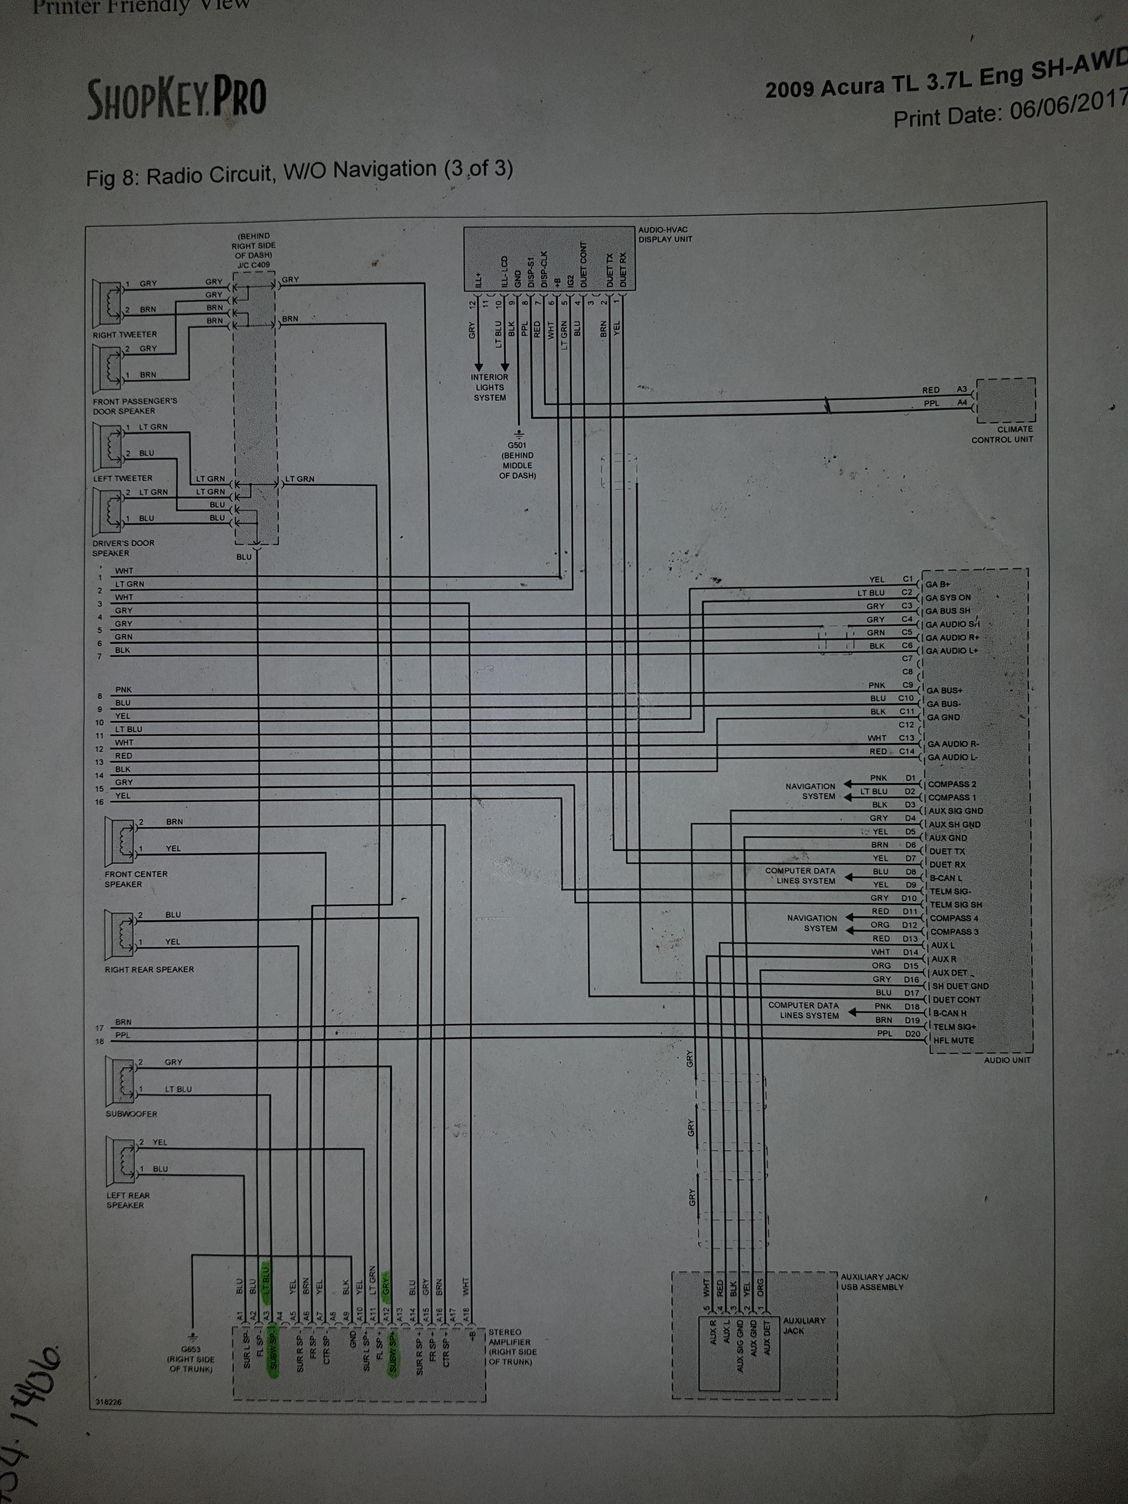 2010 Acura Tl Wiring Diagram from cimg4.ibsrv.net